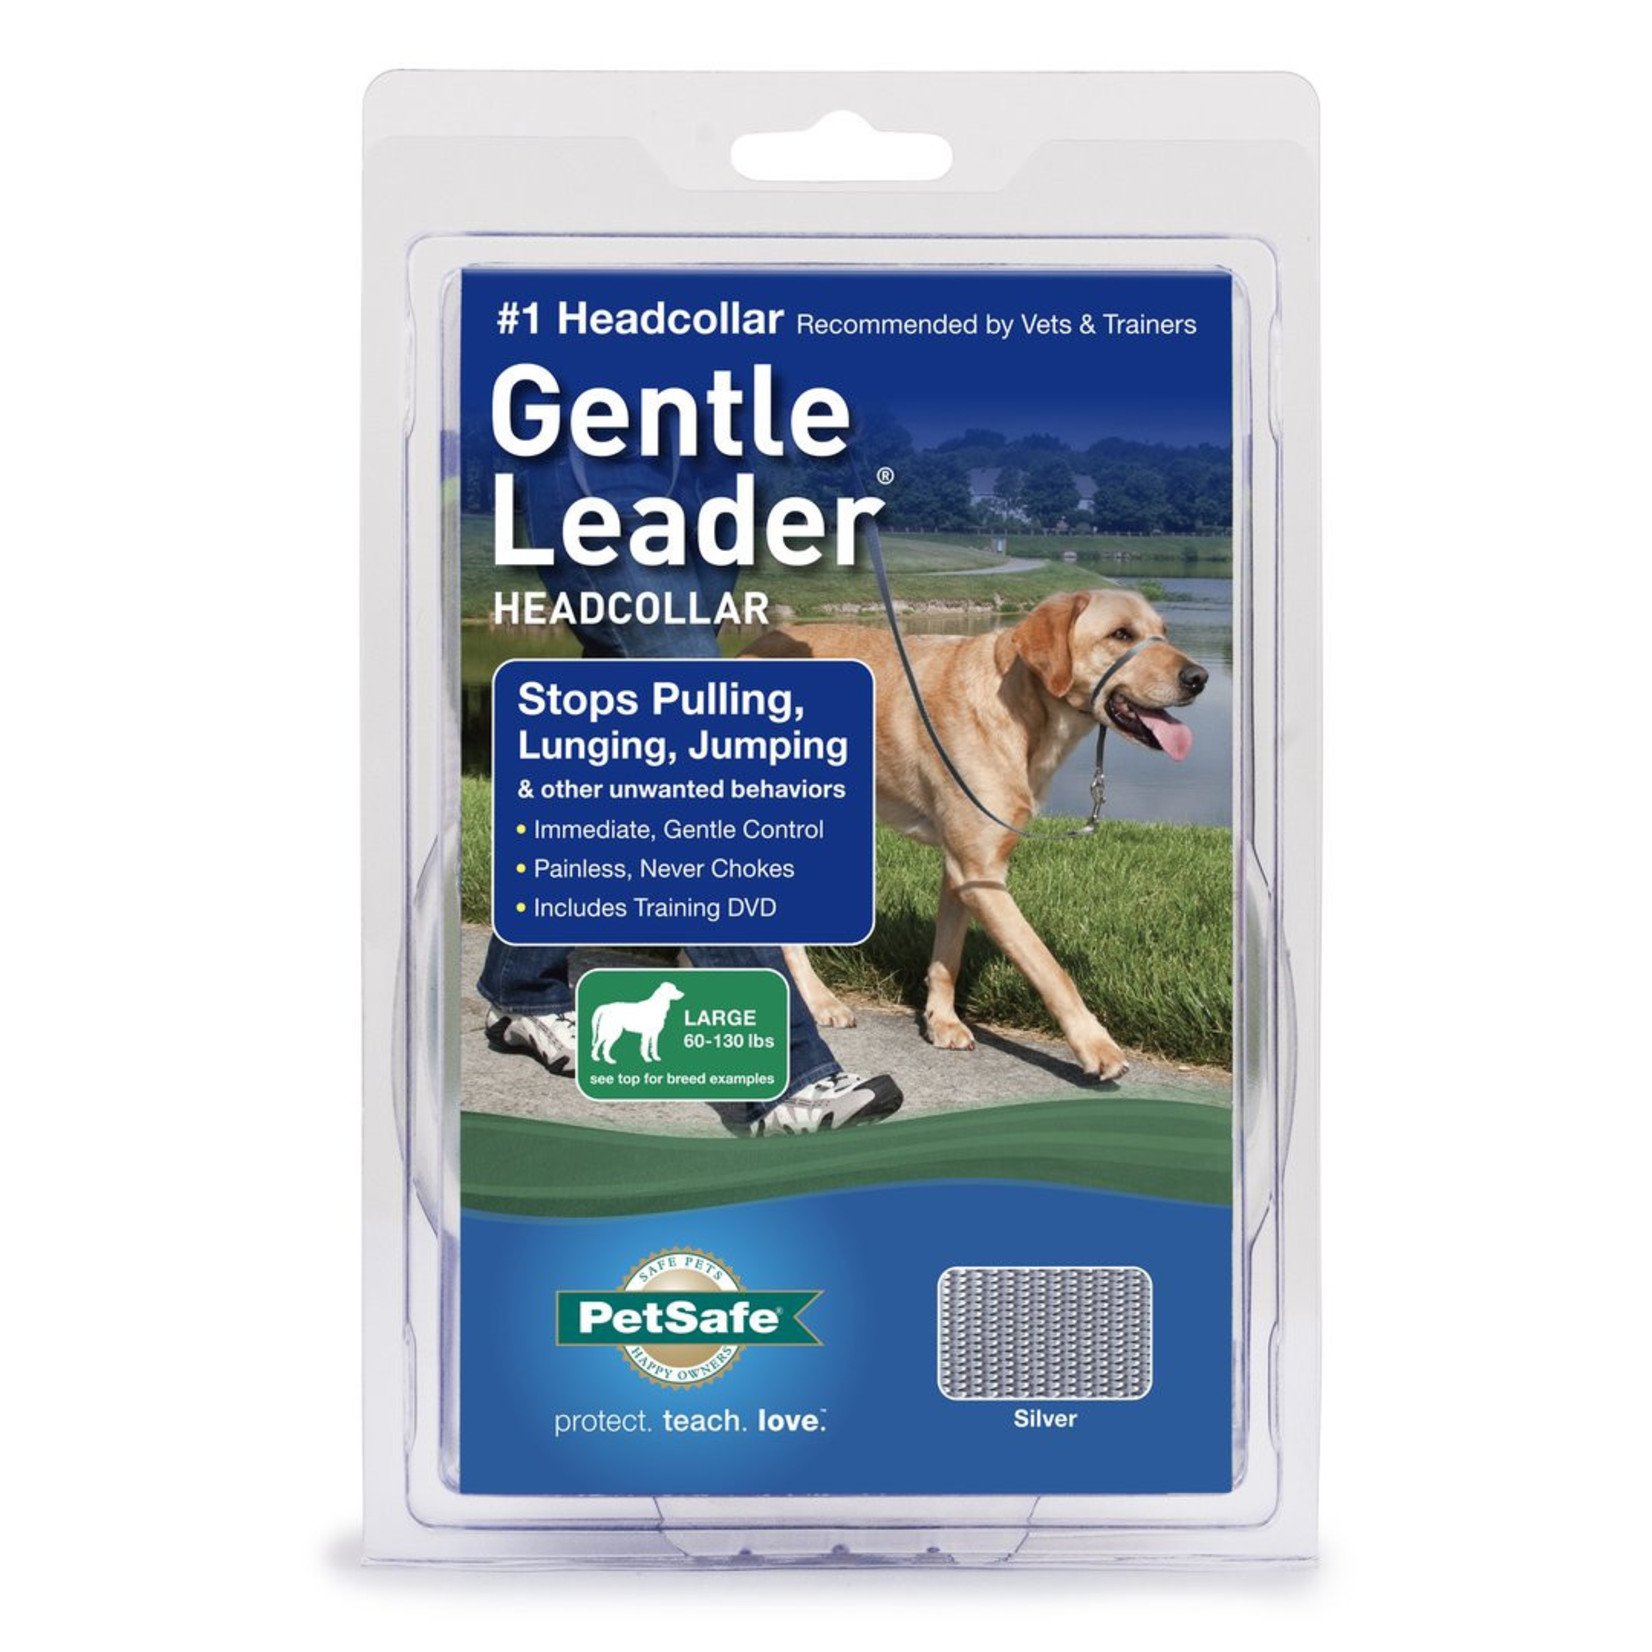 PetSafe PetSafe Gentle Leader Dog Head Collar Harness